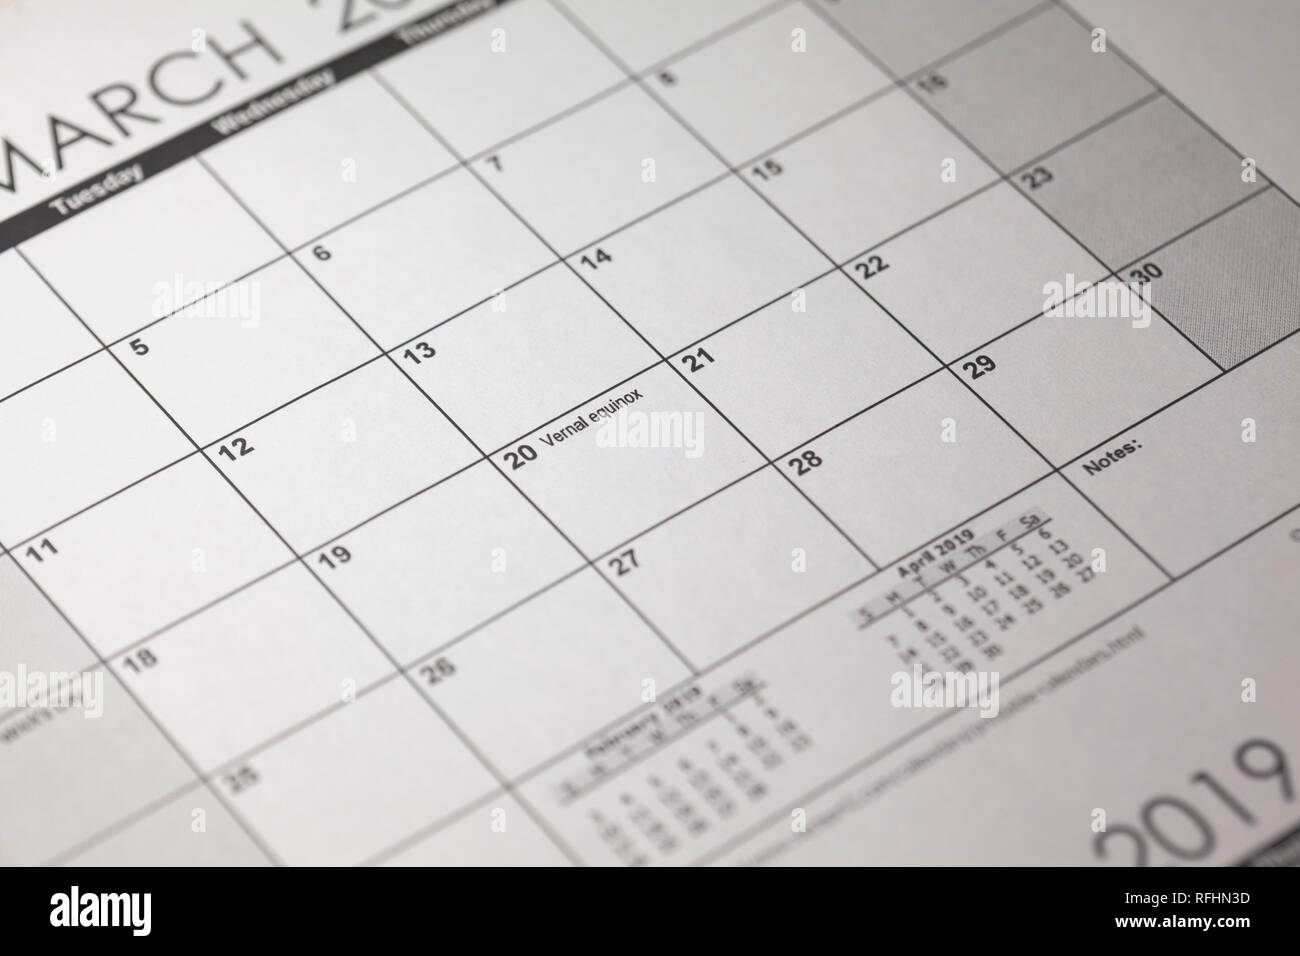 Equinozio di primavera 2019. Chiusura del calendario del mese di marzo 20 PRIMAVERA equinozio di primavera. Foto Stock